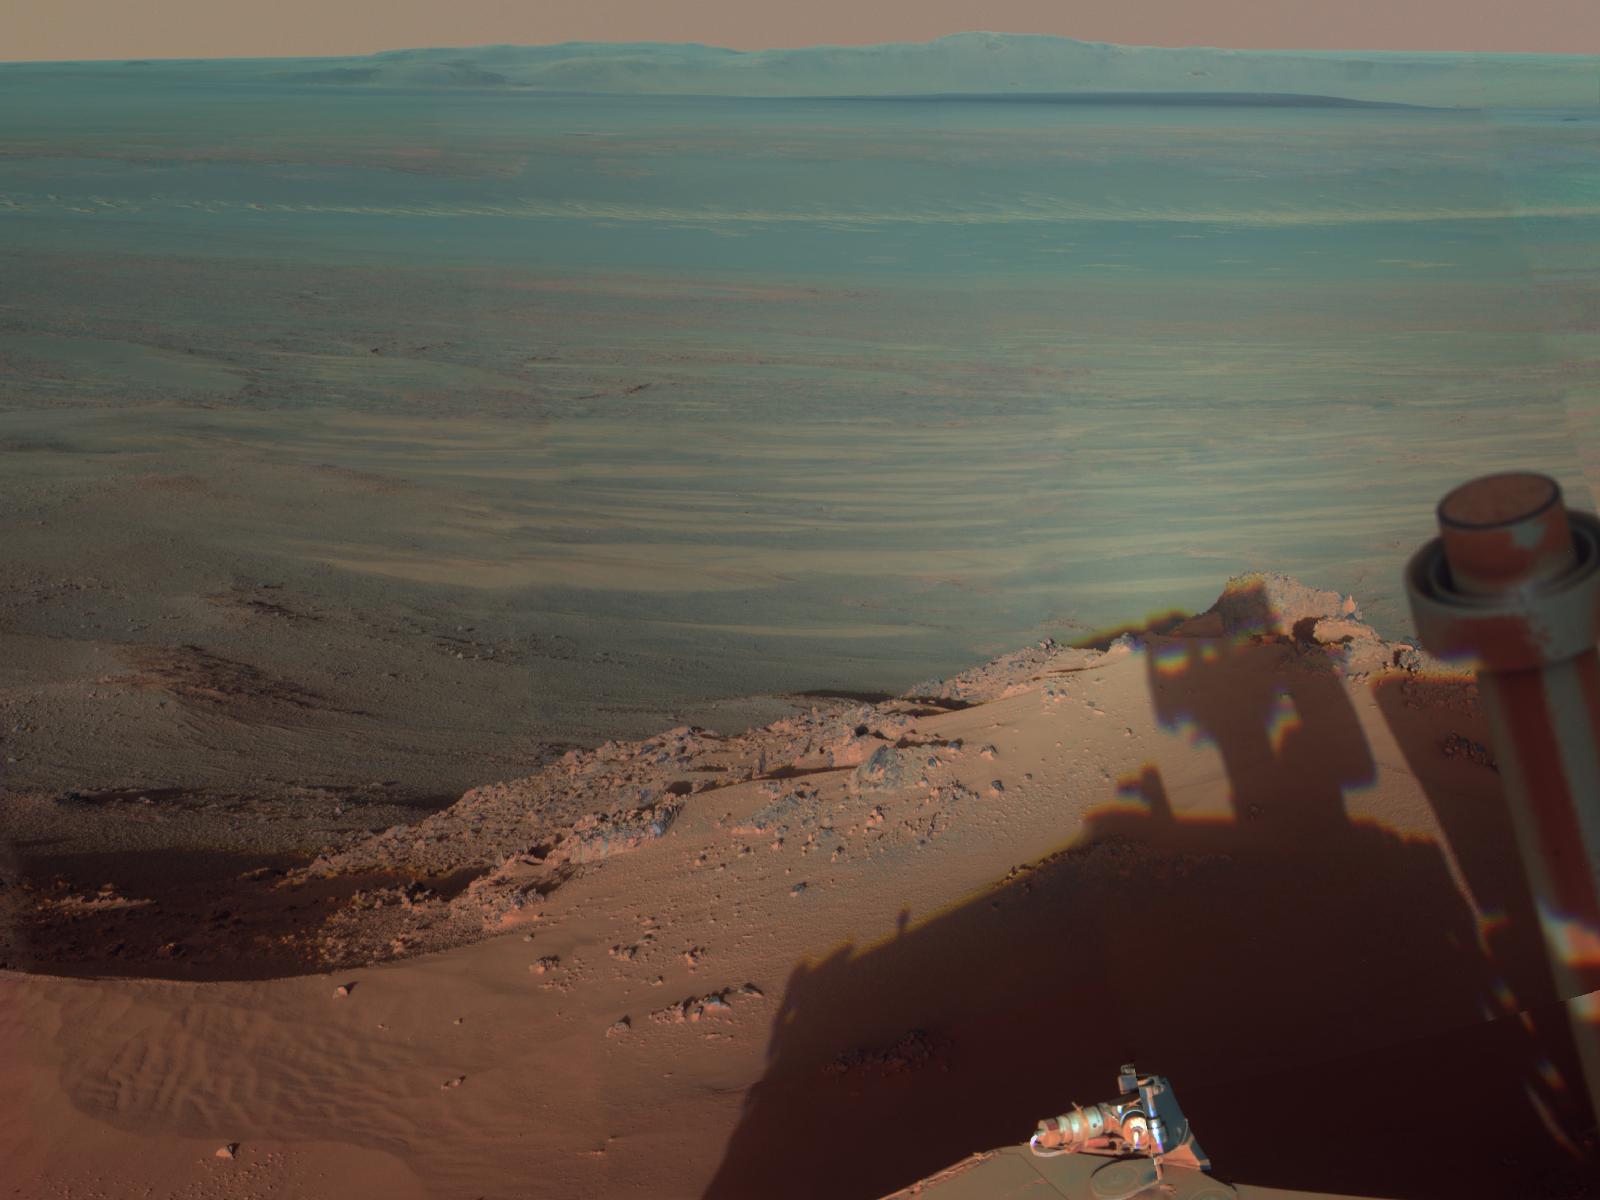 opportunity rover selfie